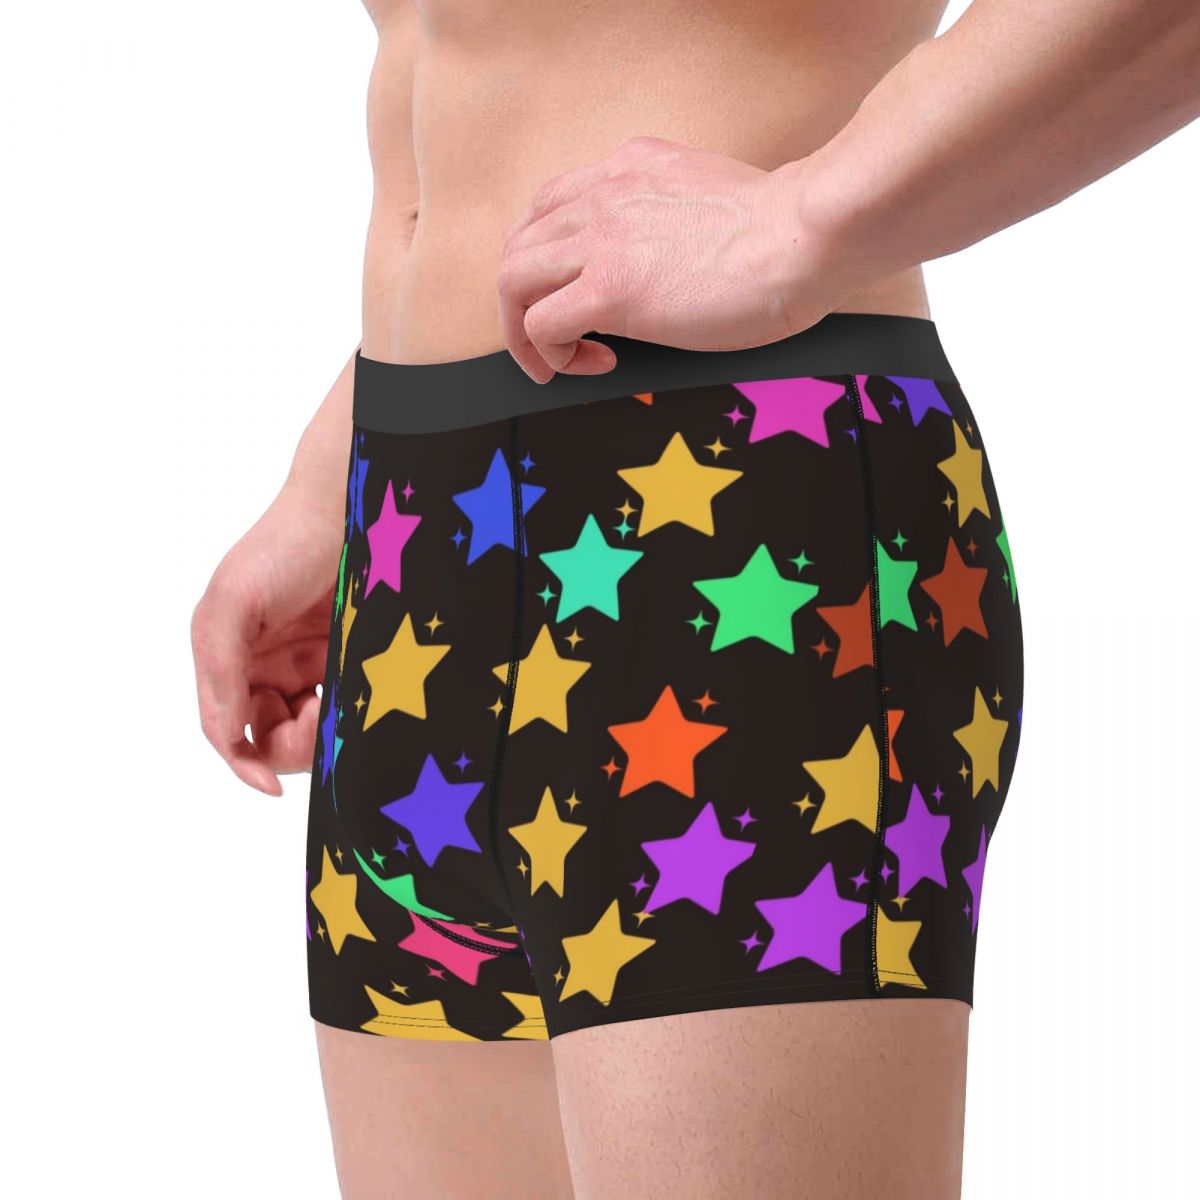 Star Men Underwear Heartstopper Oseman Charlie Nick Boys Love Boxer Shorts Panties Novelty Breathable Underpants for Homme